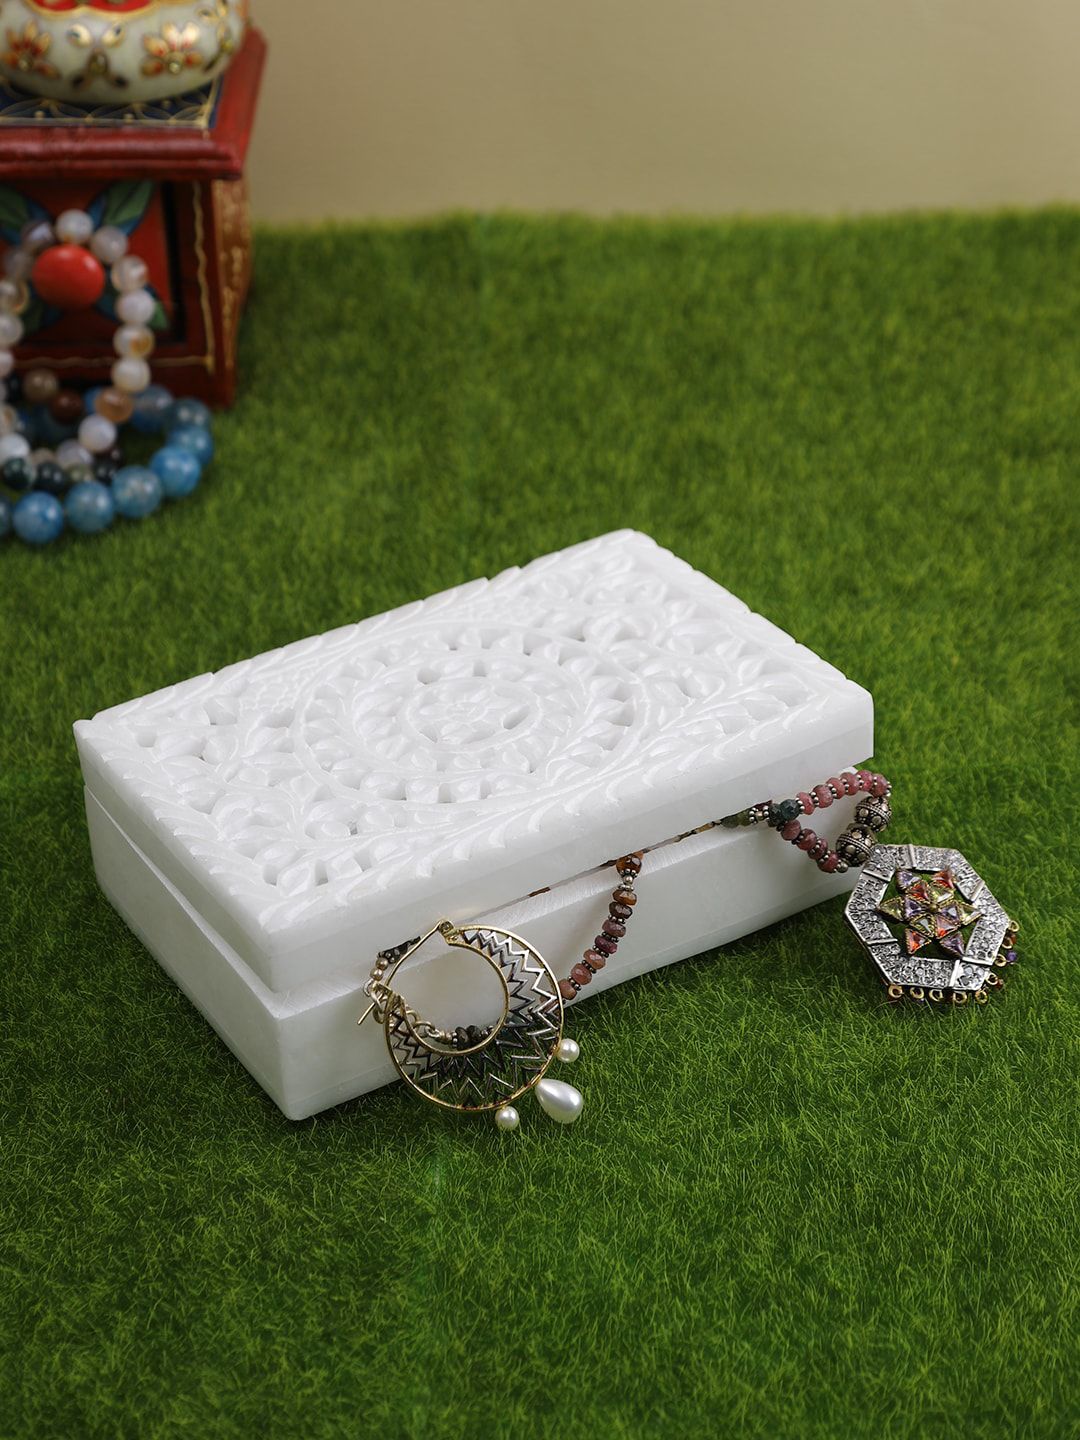 Aapno Rajasthan Unisex White Intricate Designed Handmade Concrete Jewellery Organisers Price in India